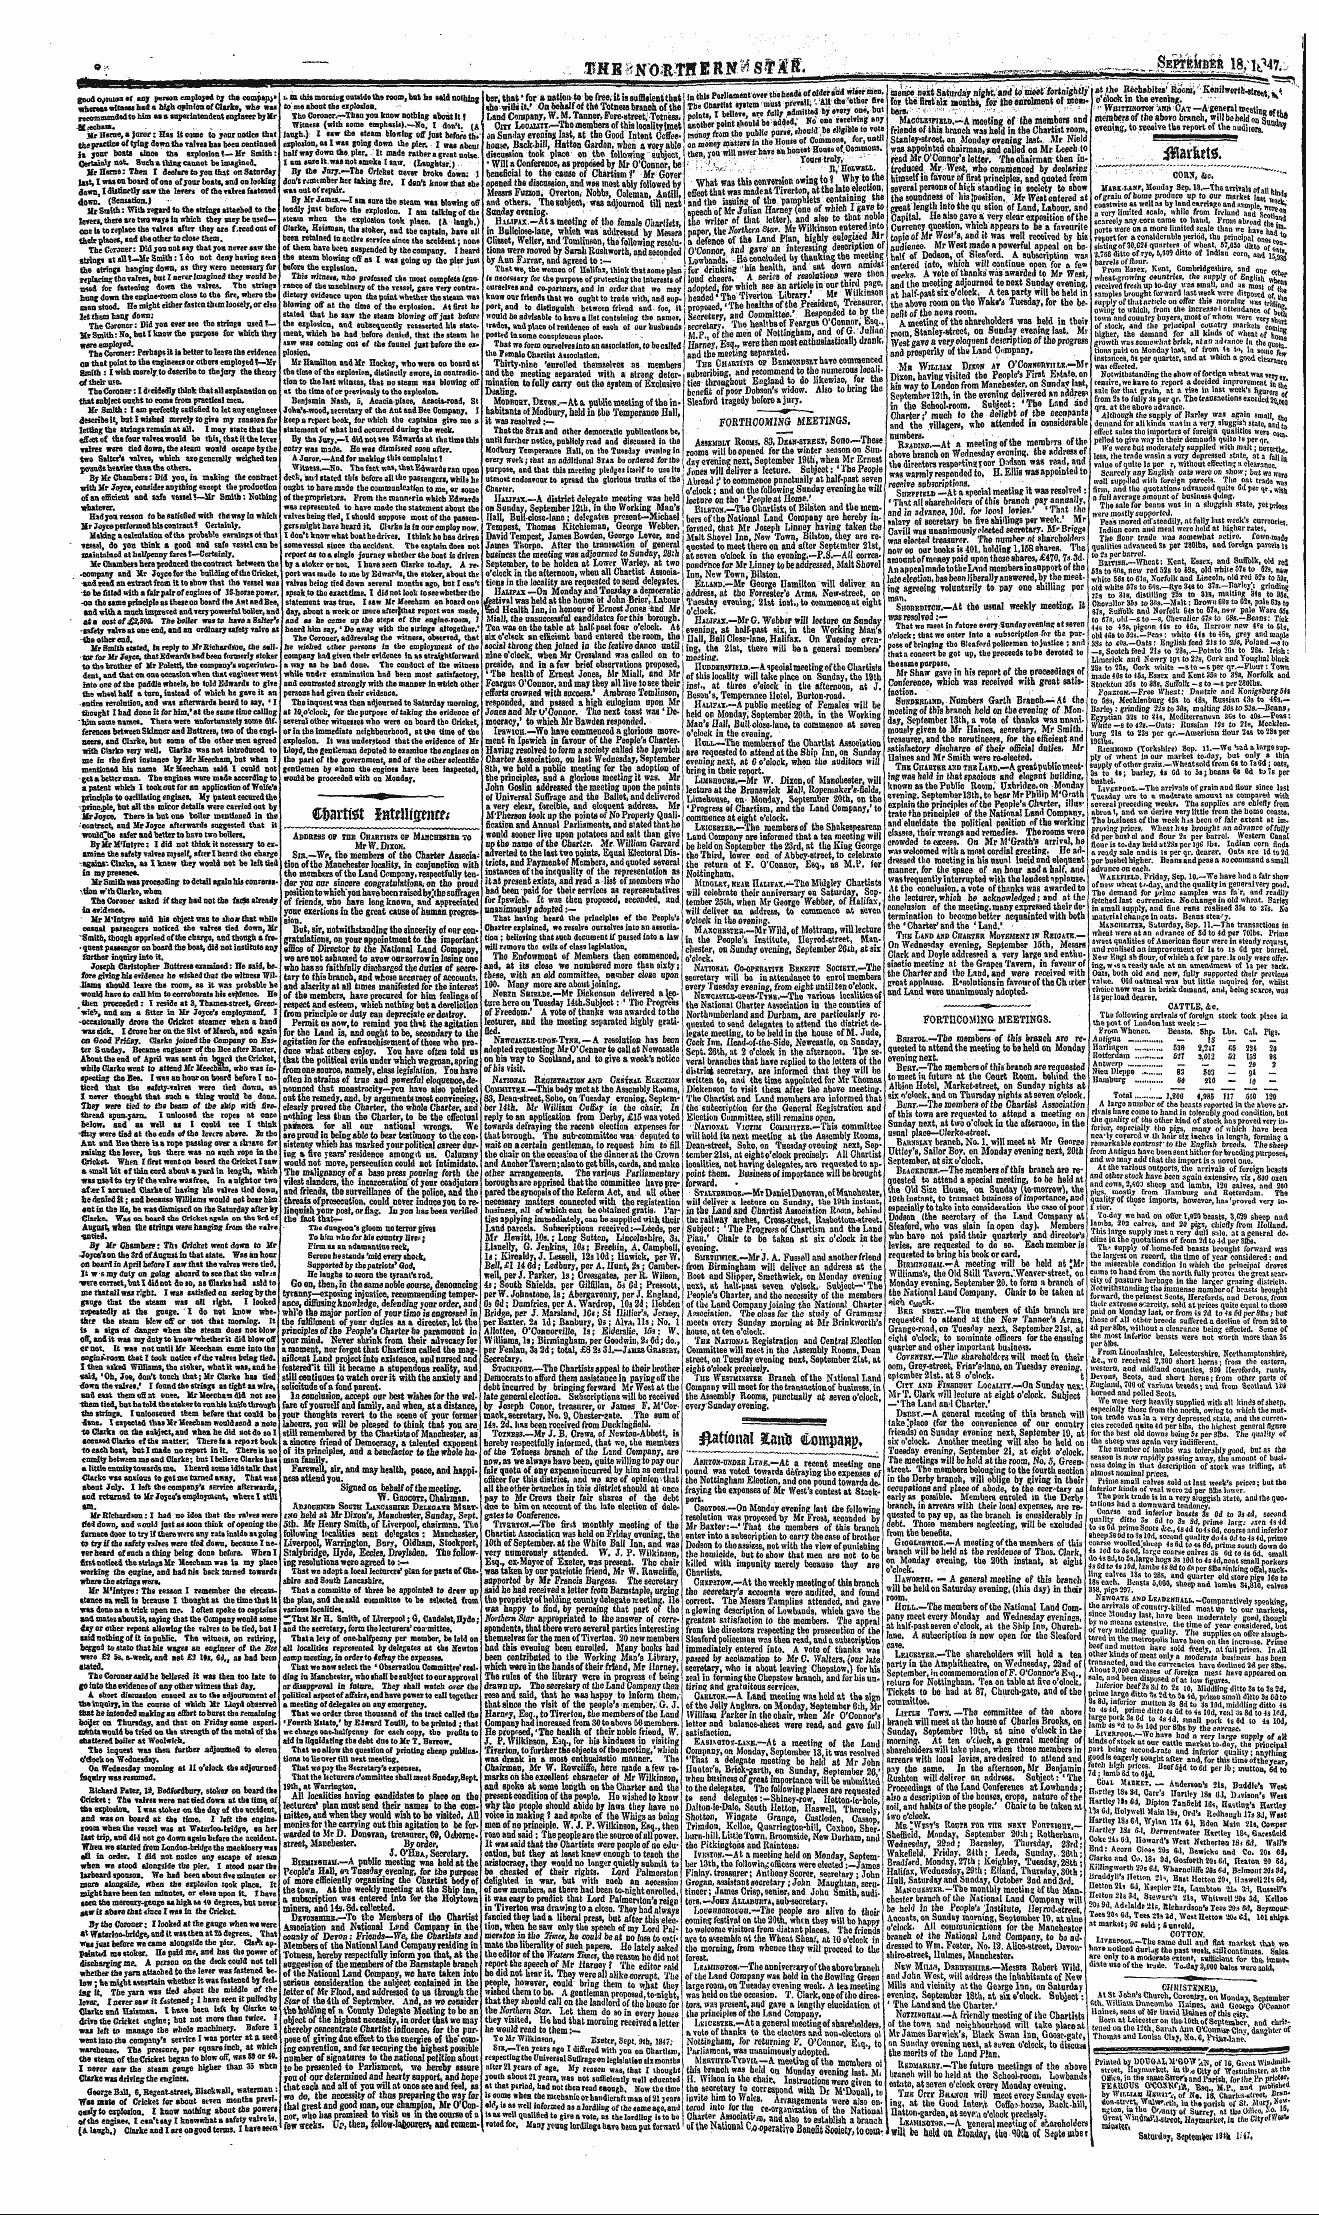 Northern Star (1837-1852): jS F Y, 2nd edition - Fiatfonal Mm Compaq